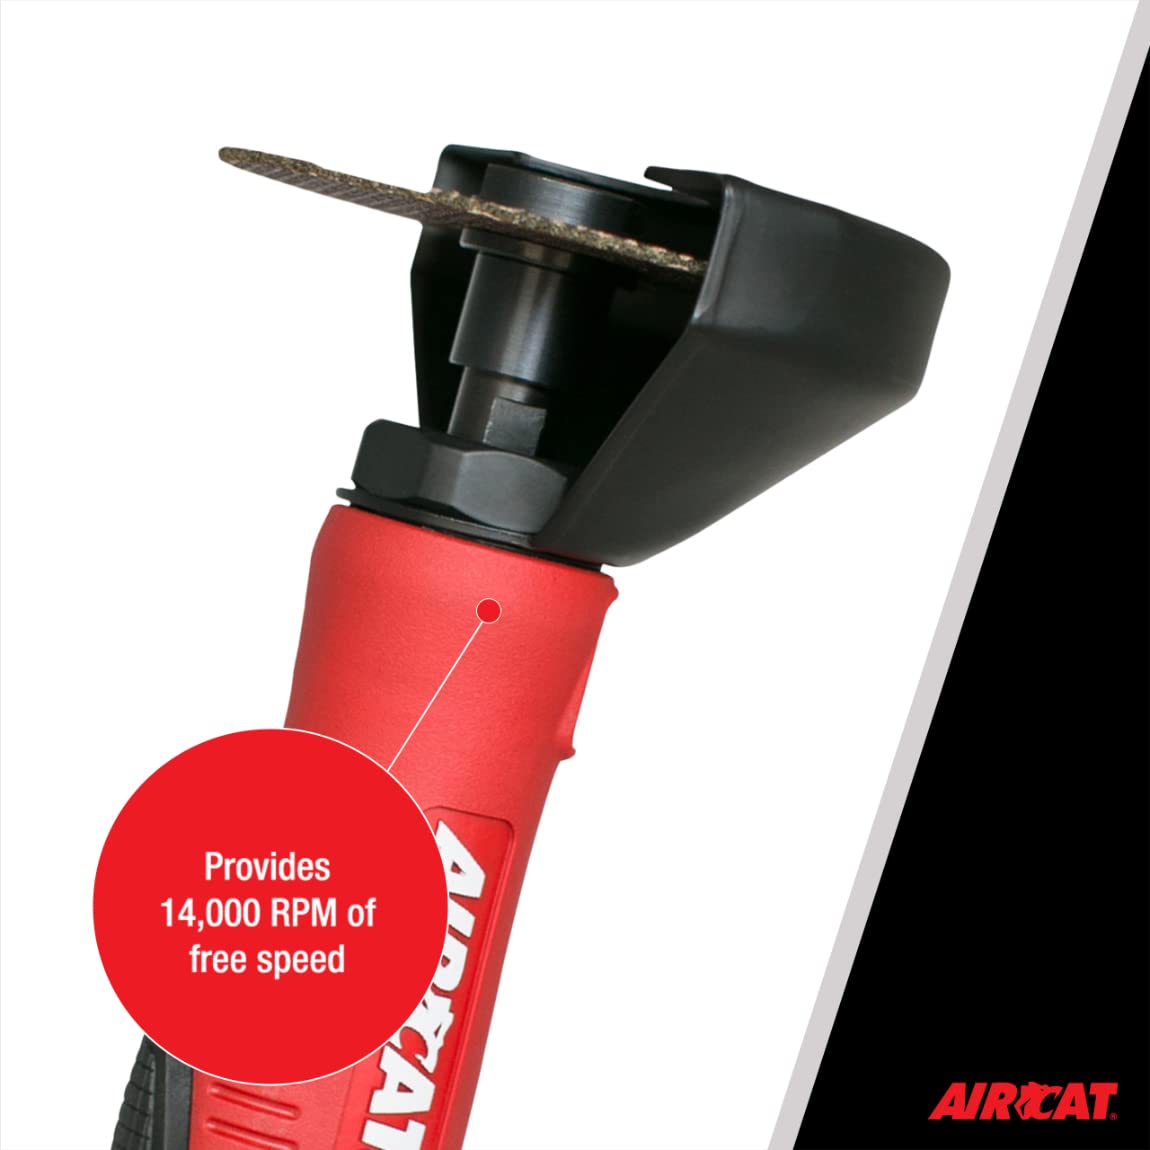 AIRCAT Pneumatic Tools 6560: 1 HP 4-Inch Composite Cut-Off Tool 14,000 RPM